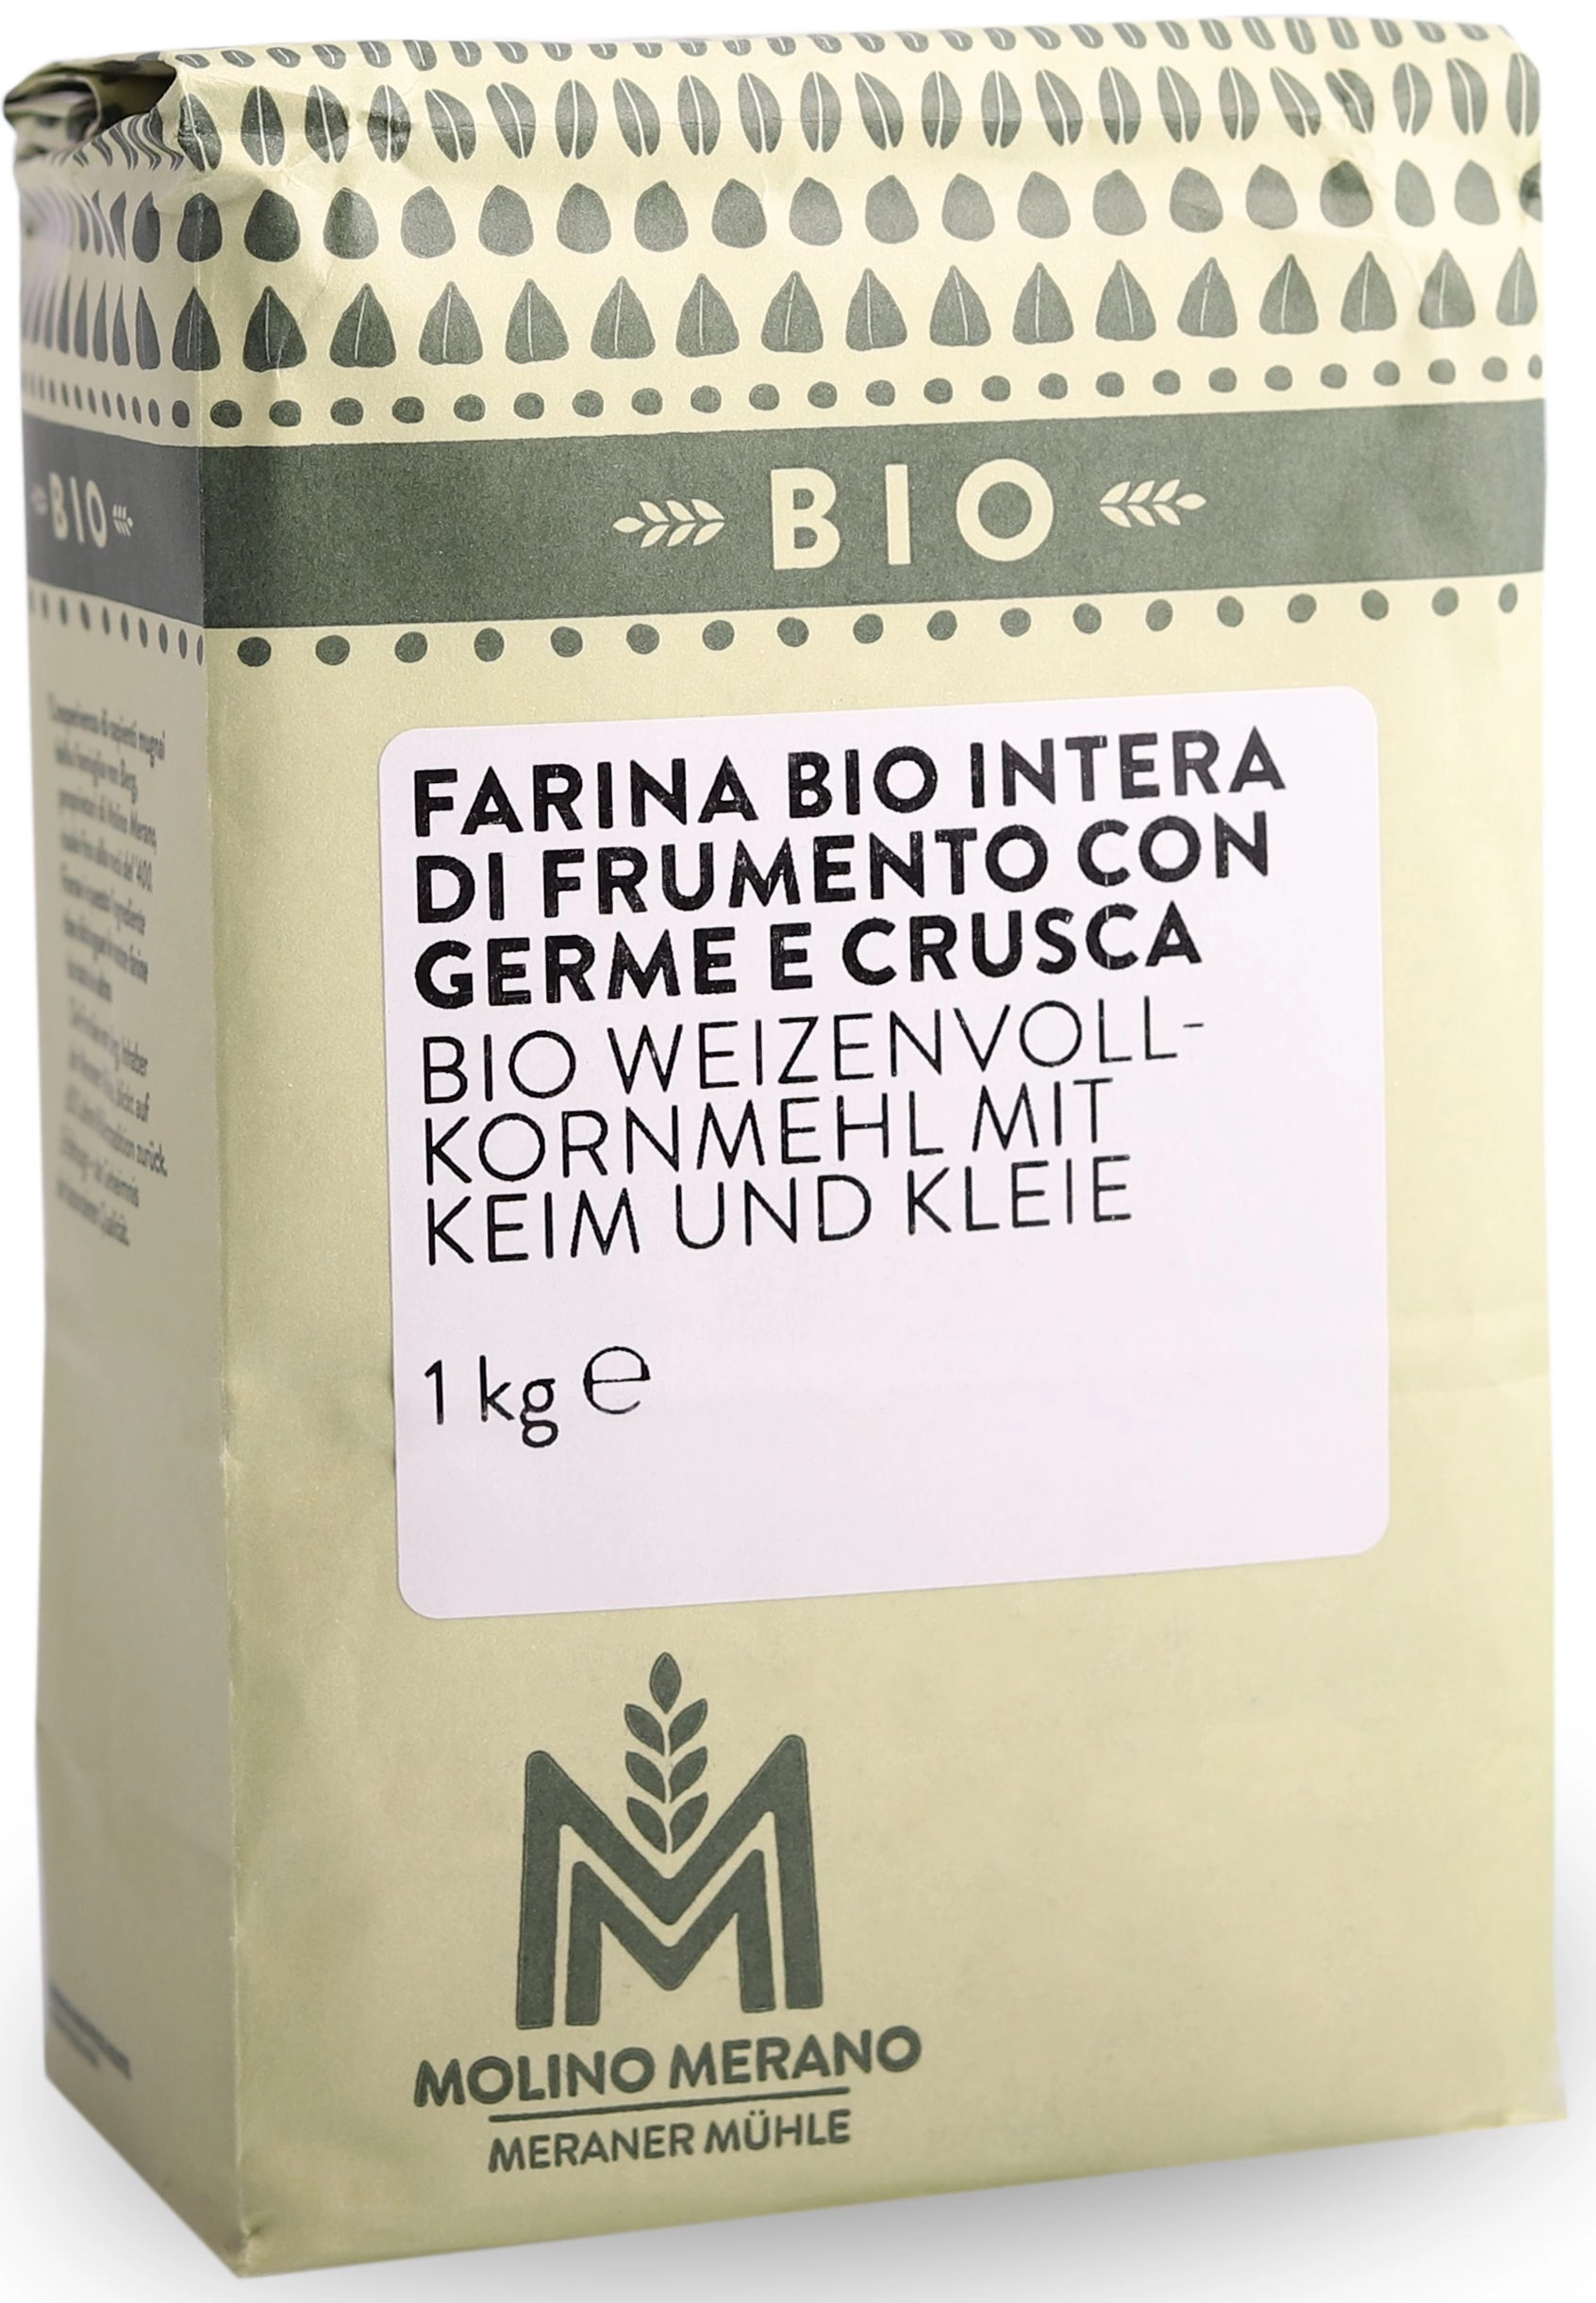 Organic wholemeal wheat flour with germ